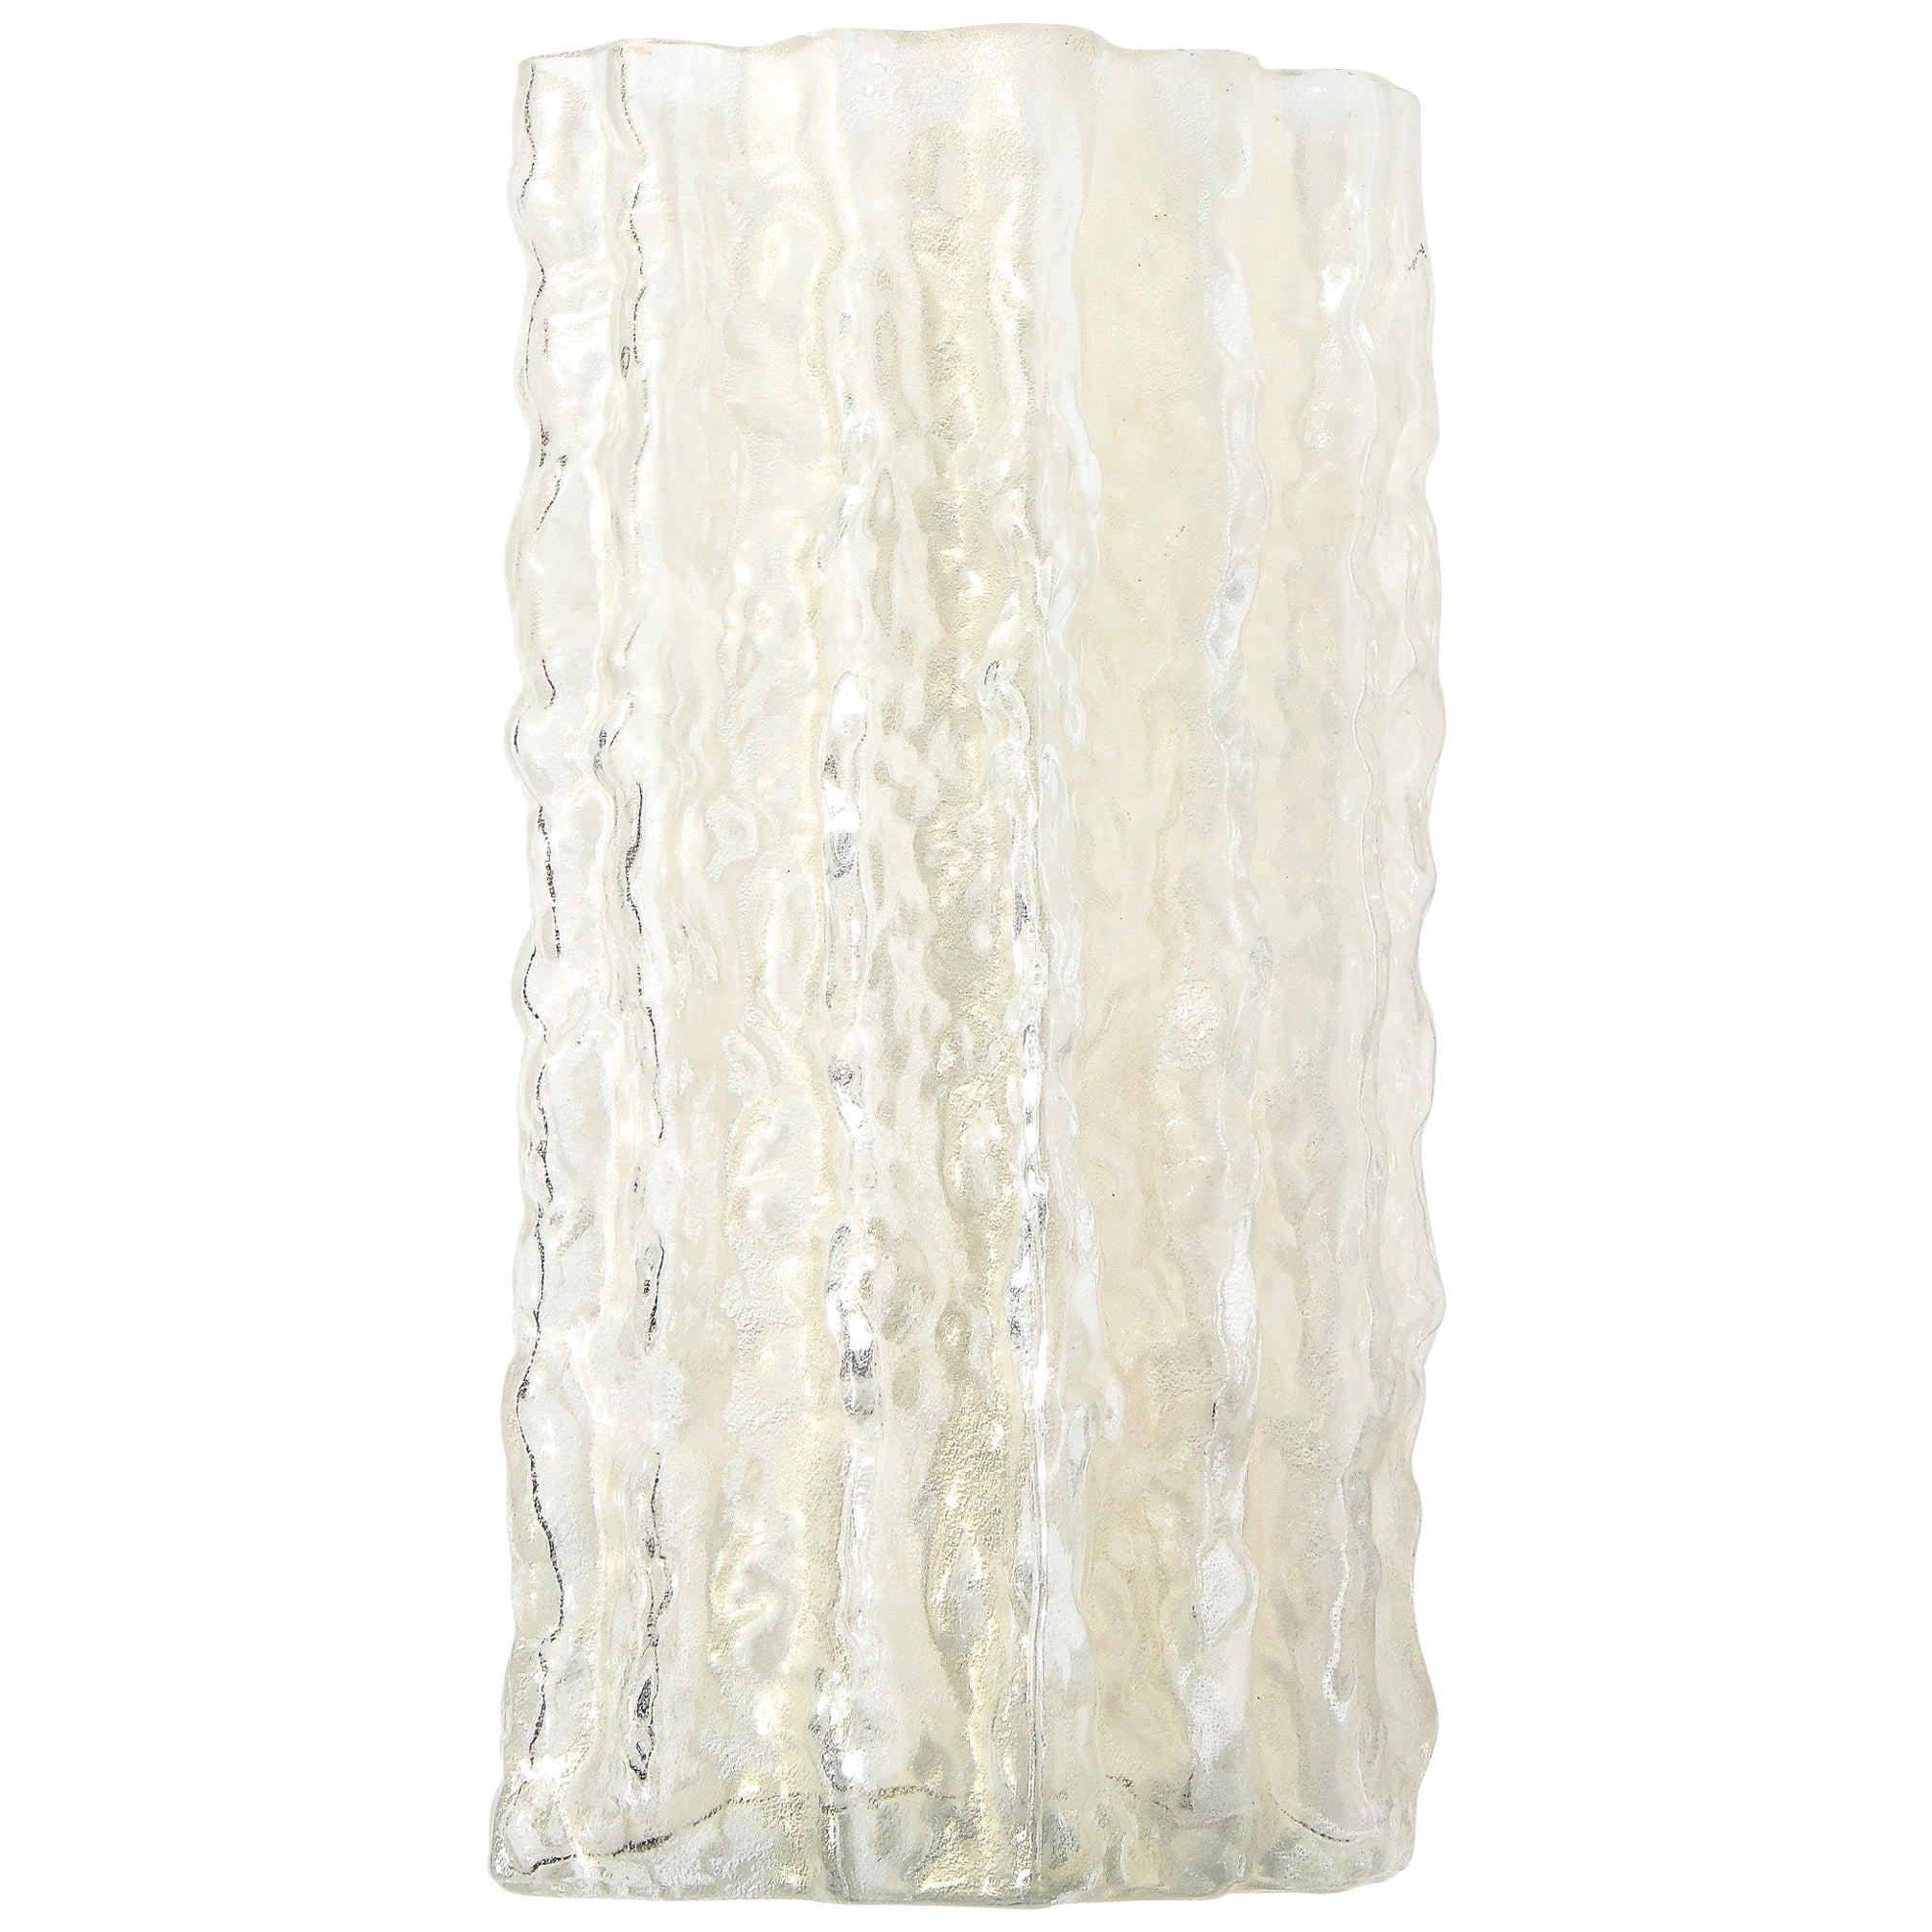 Mid-Century Modern Organic Textural Semi Translucent Murano Glass Vase